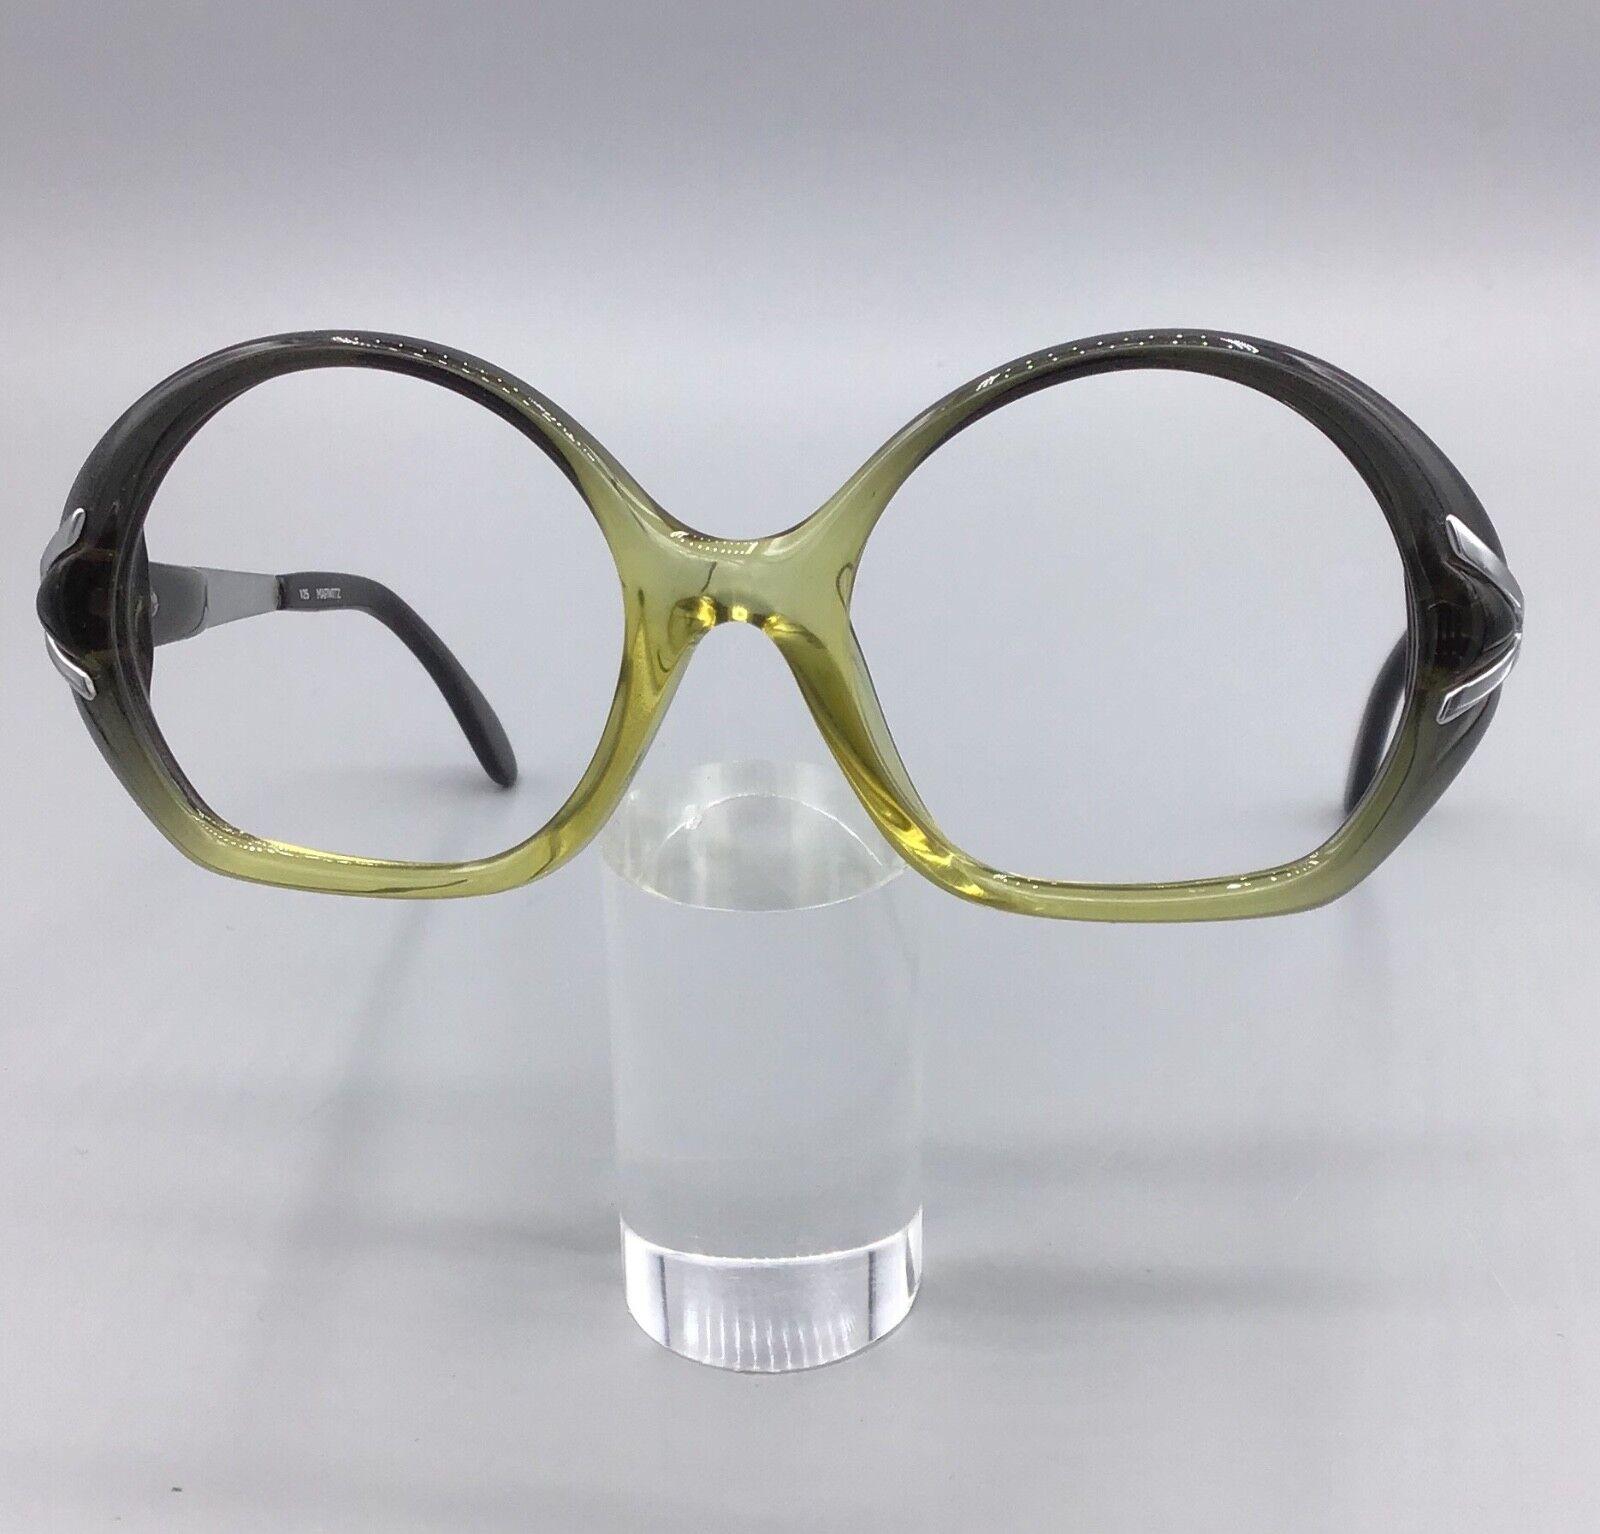 Marwitz occhiale vintage eyewear frame brillen lunettes gafas model 3028 339 AE4